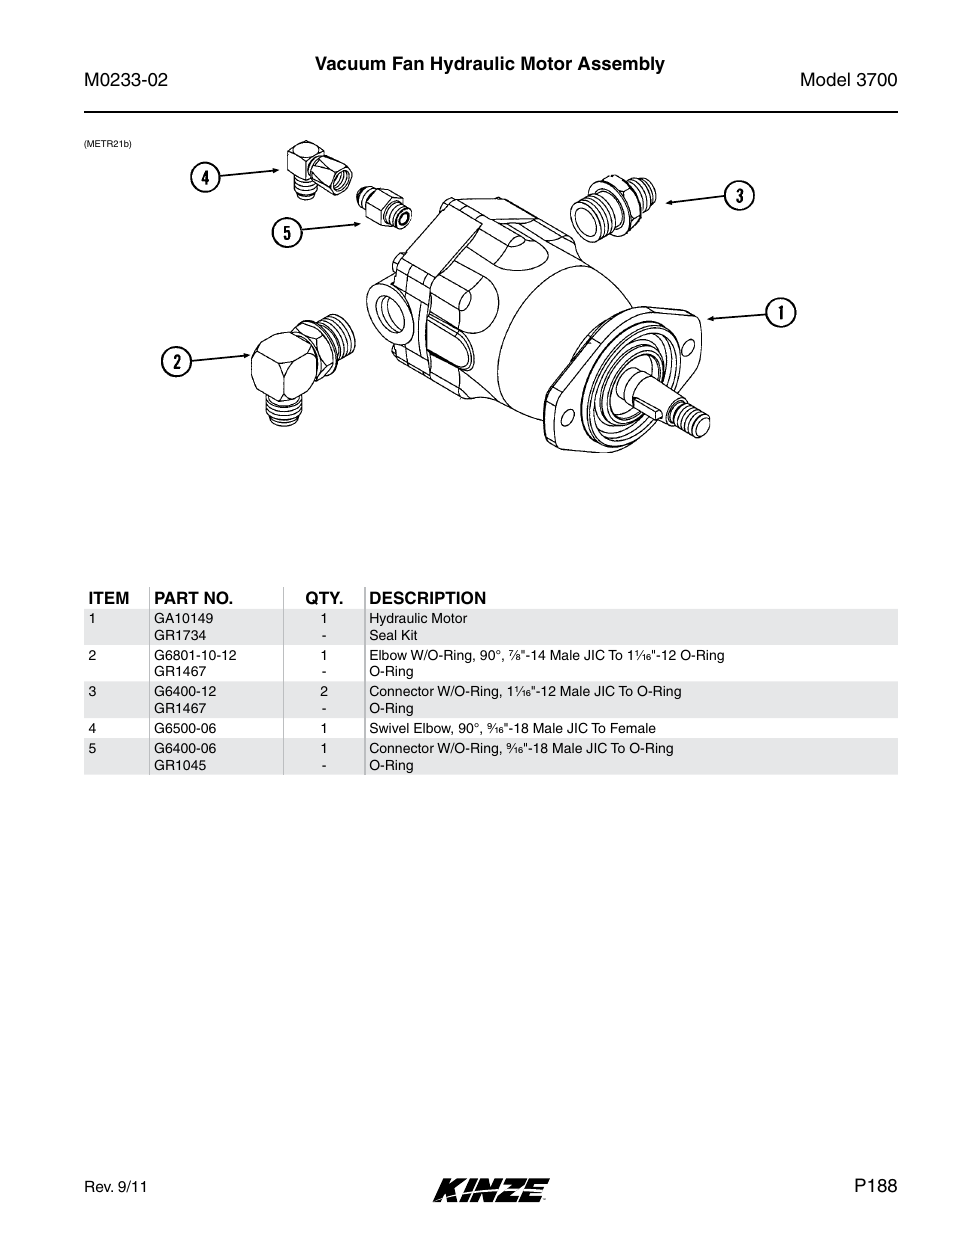 Vacuum fan hydraulic motor assembly, P188 | Kinze 3700 Front Folding Planter Rev. 6/14 User Manual | Page 191 / 284